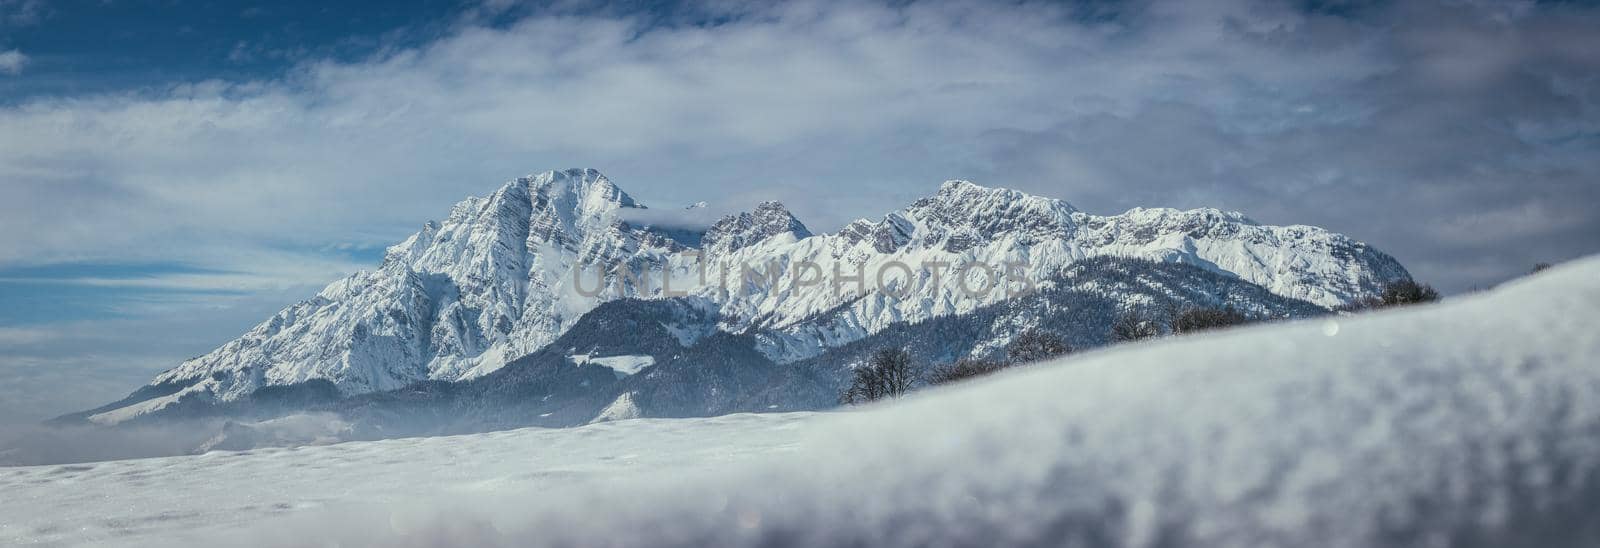 Idyllic snowy mountain peaks, landscape, Alps, Austria by Daxenbichler